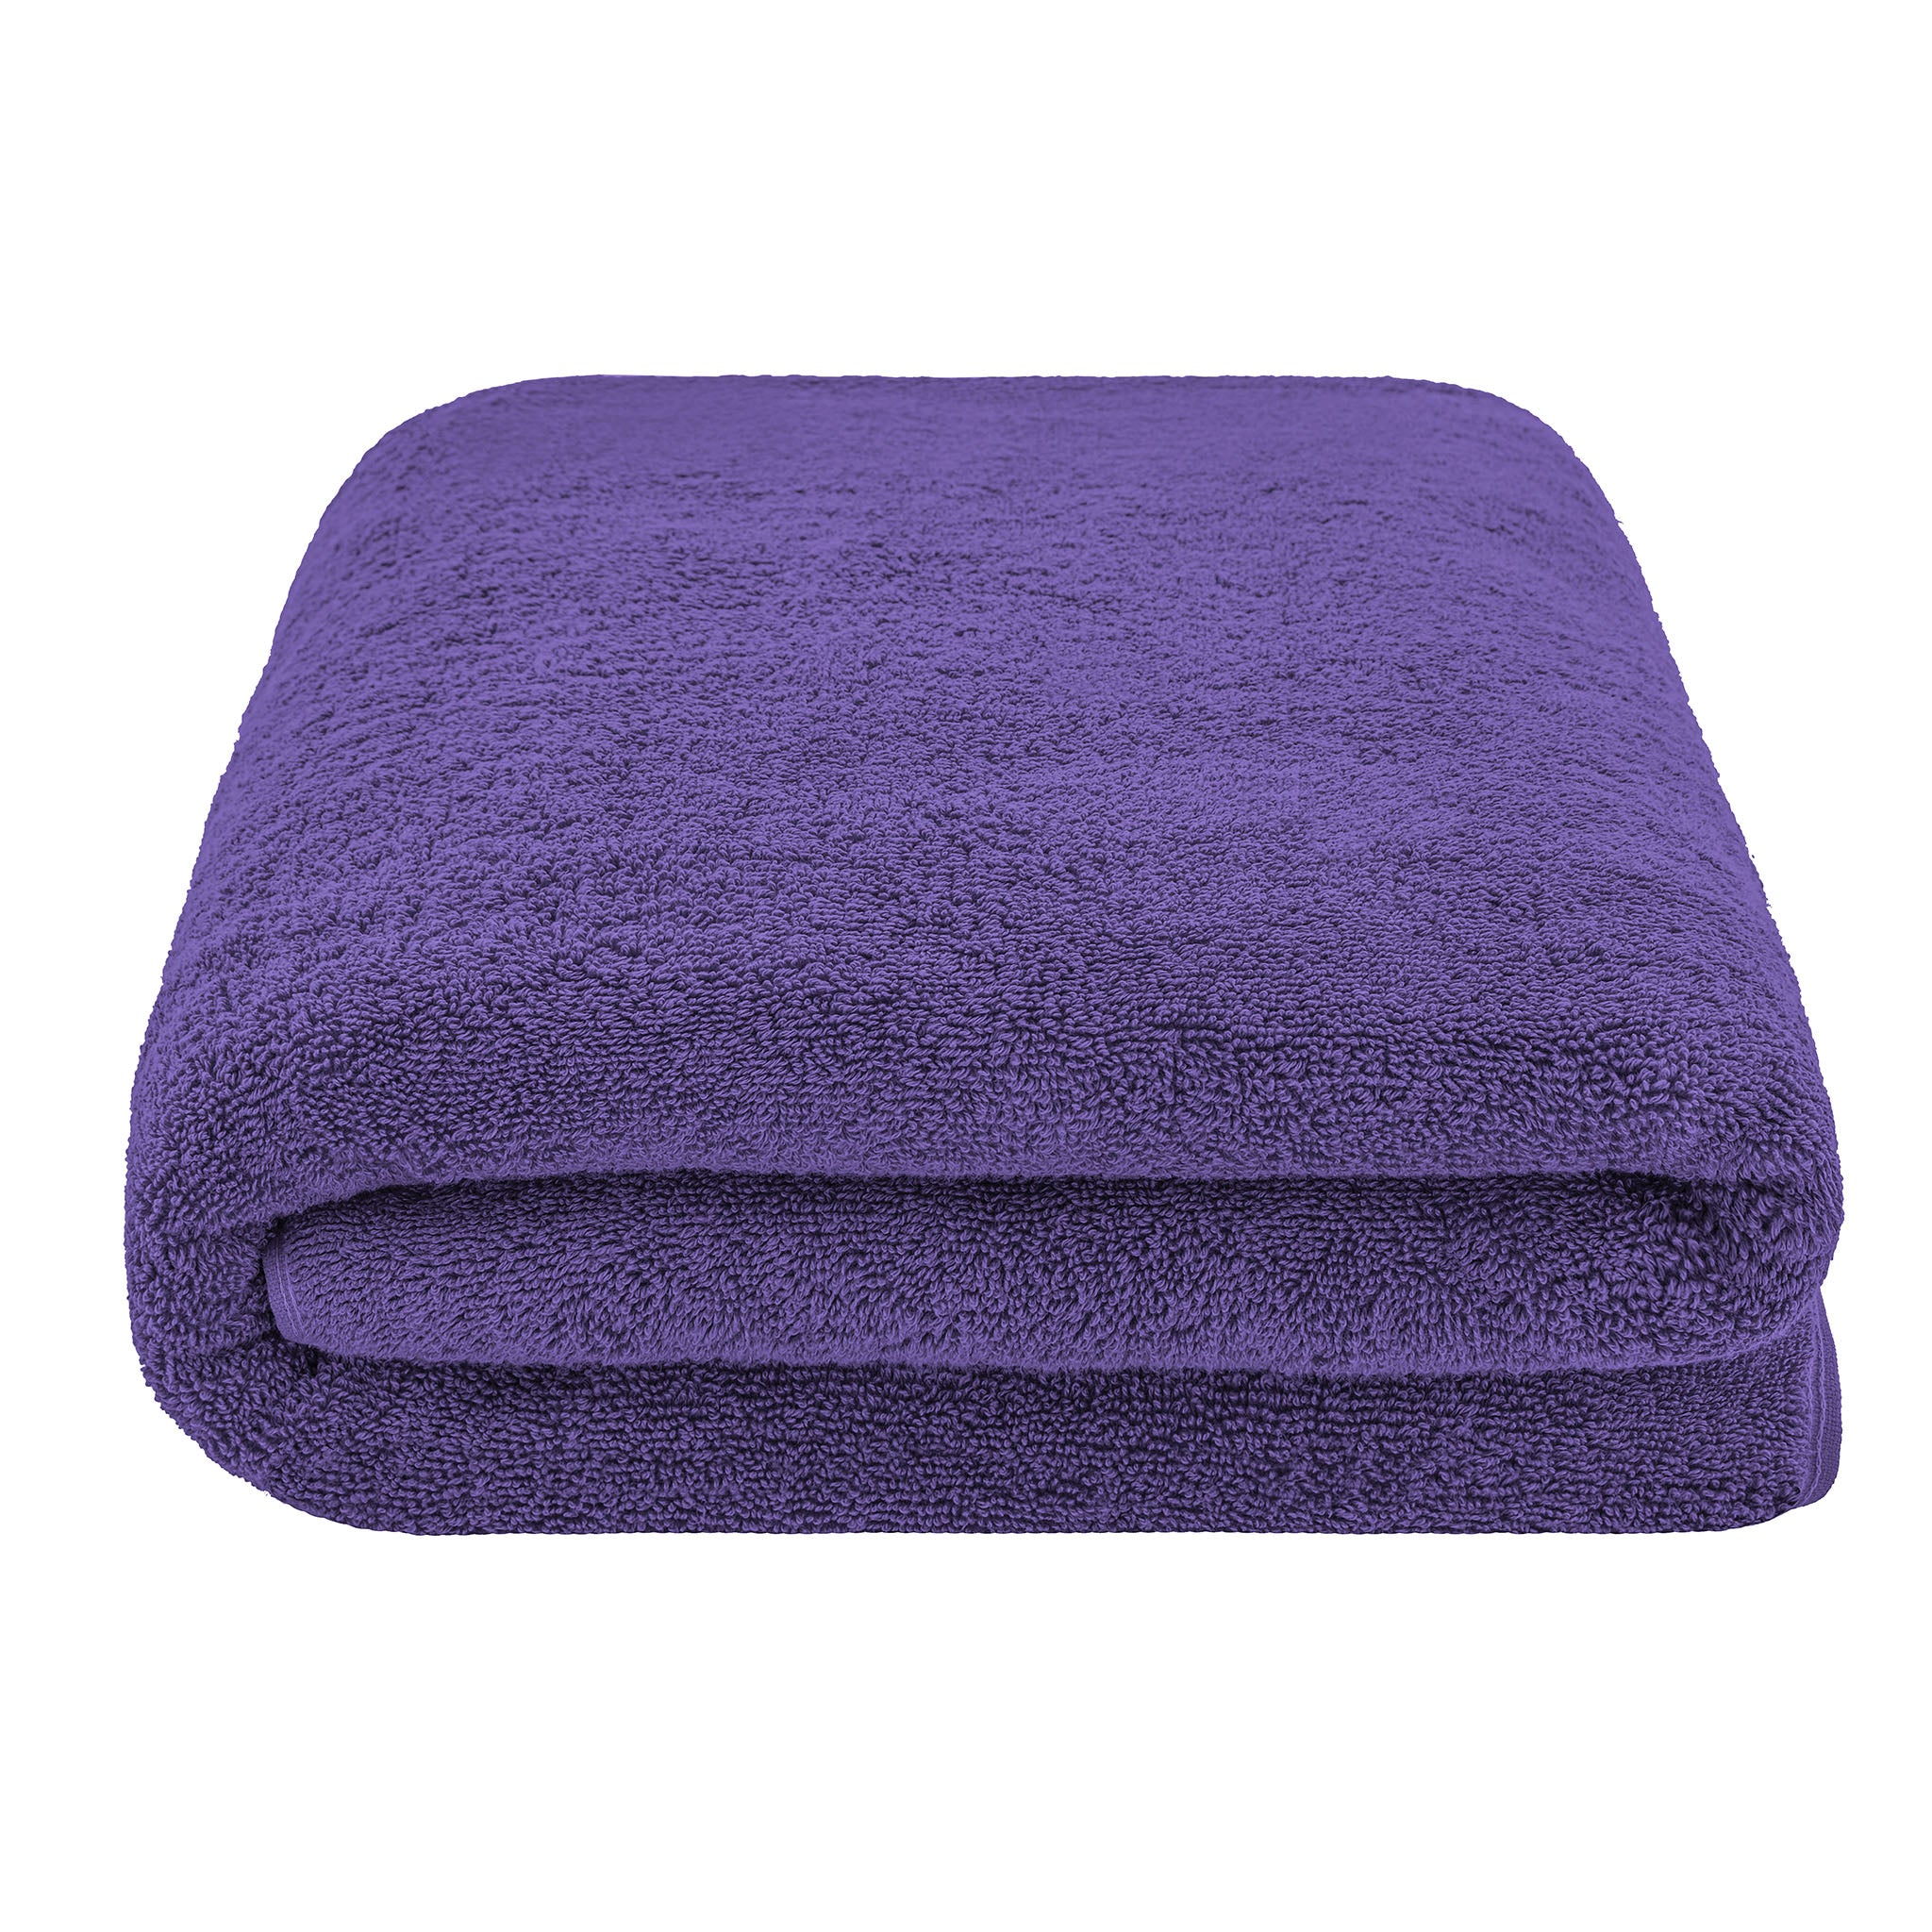 American Soft Linen 100% Ring Spun Cotton 40x80 Inches Oversized Bath Sheets purple-3